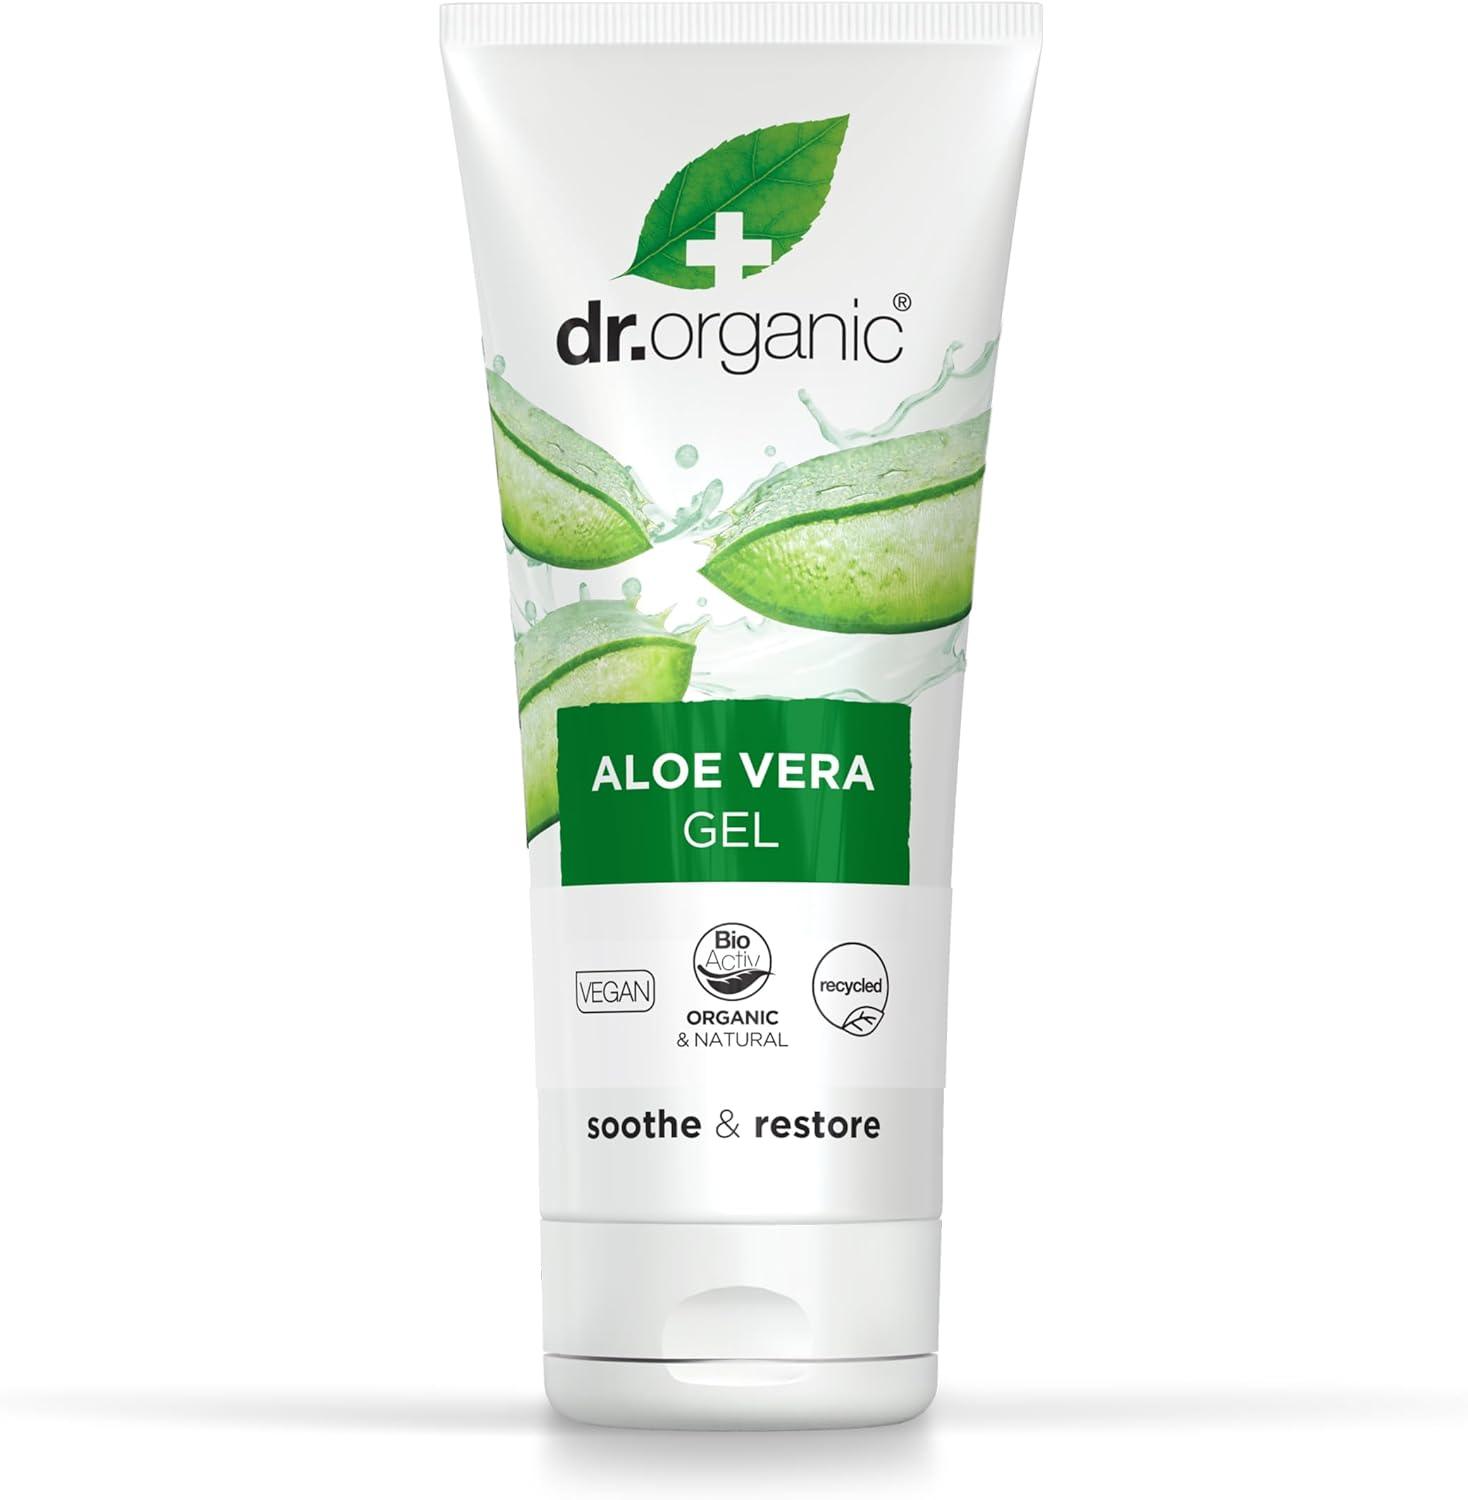 Dr. Organic Dr.Organic Body Organic Gel Aloe Vera 200 ml - Wellness Shoppee